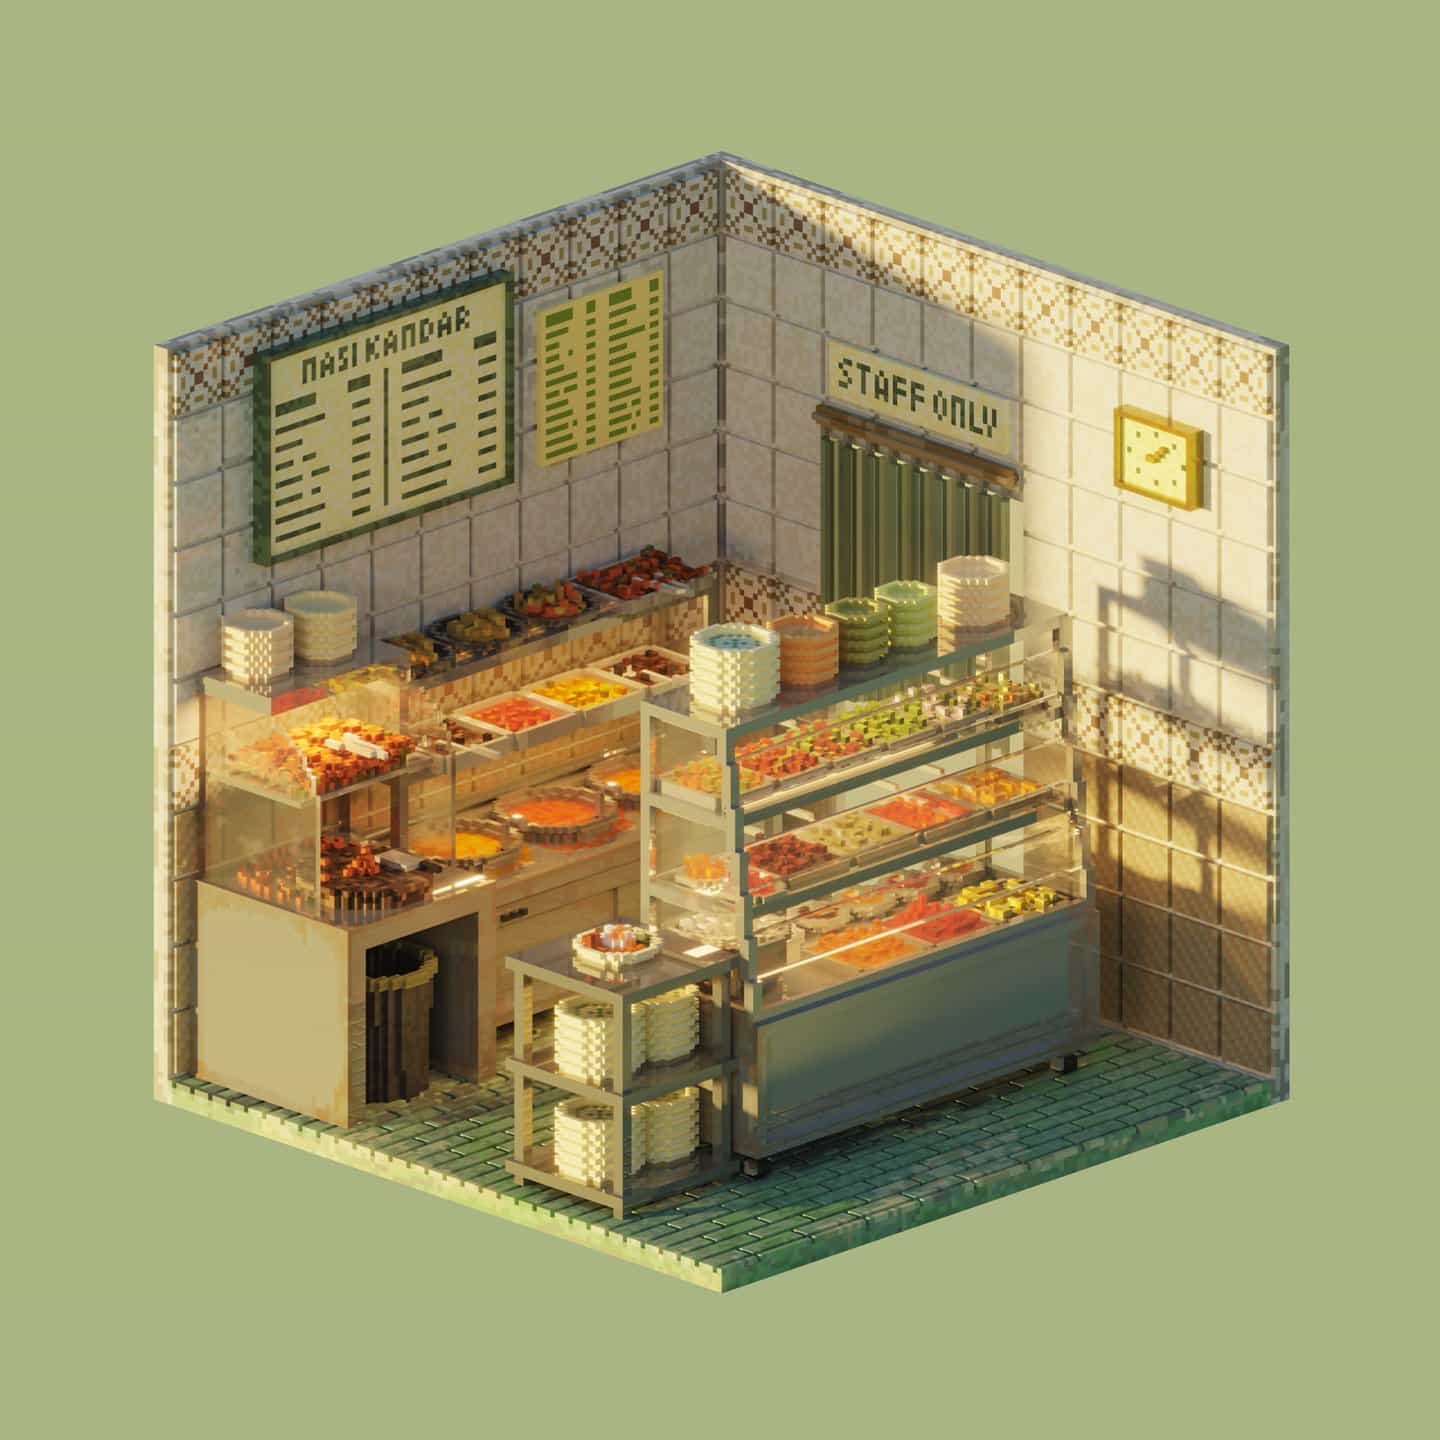 Shin Oh: Nasi Kandar Shop, serie Tiny Voxel Shops de 126³ (Copyright © Shin Oh, 2021)